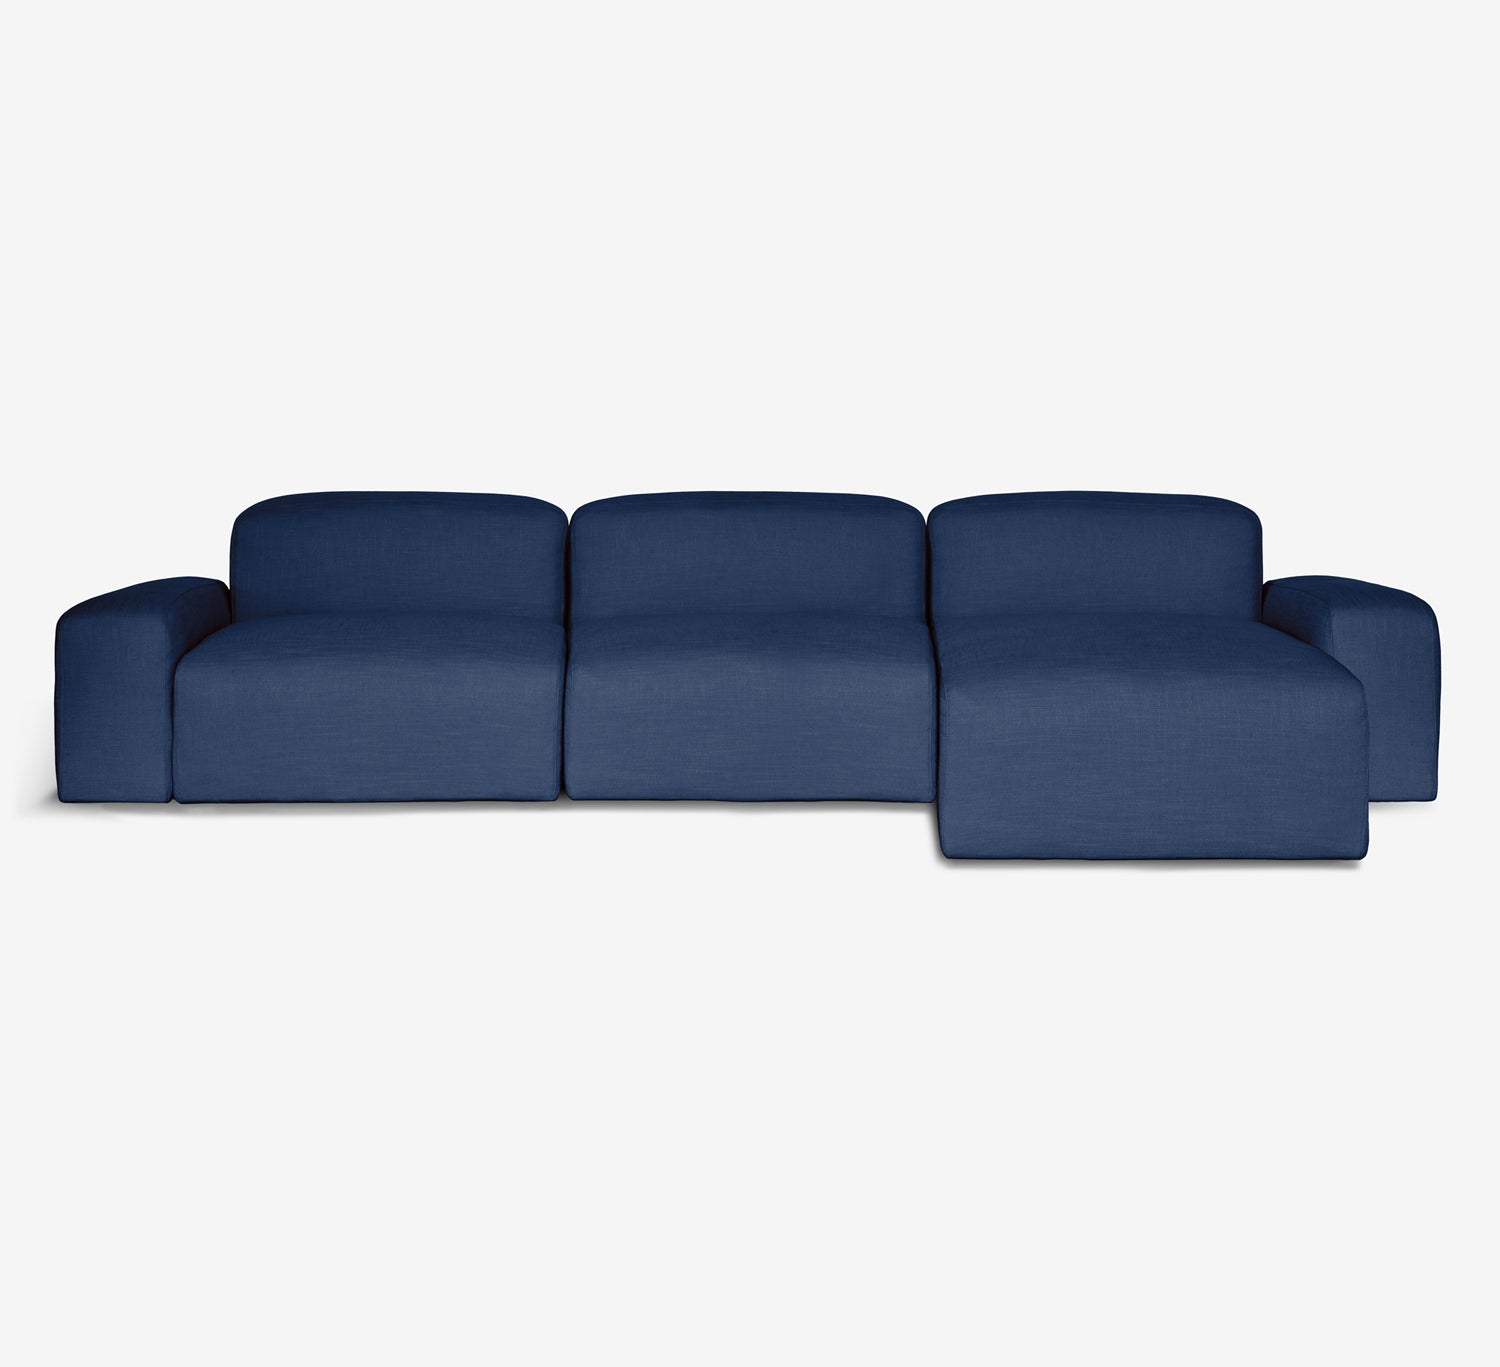 Relax in style - Libero navy blue angular sofa on white